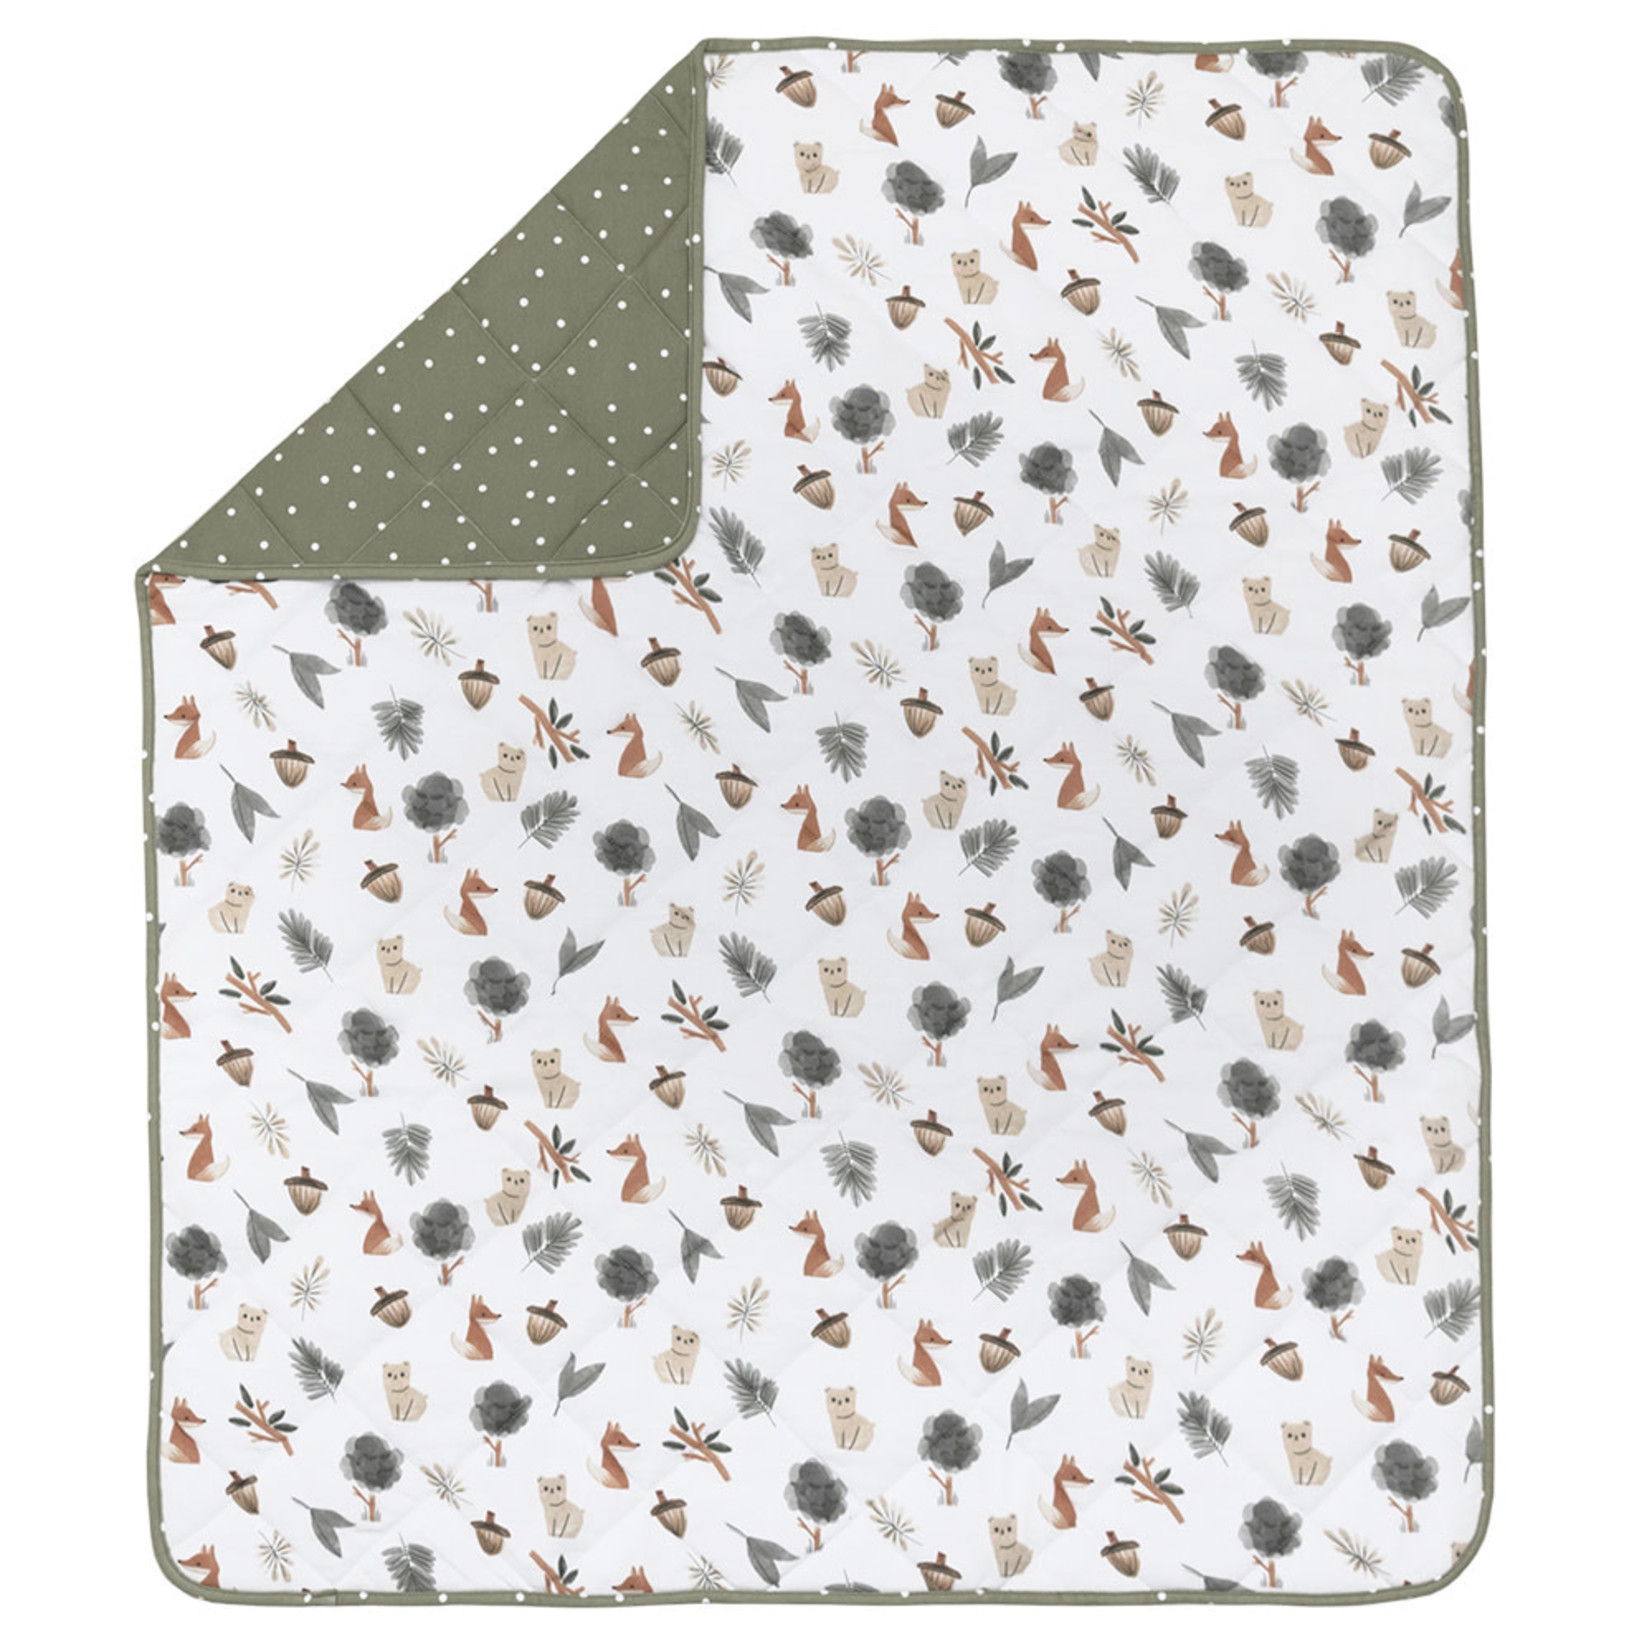 Living Textiles Reversable Jersey Cot Comforter-Forest Retreat/Olive Dots